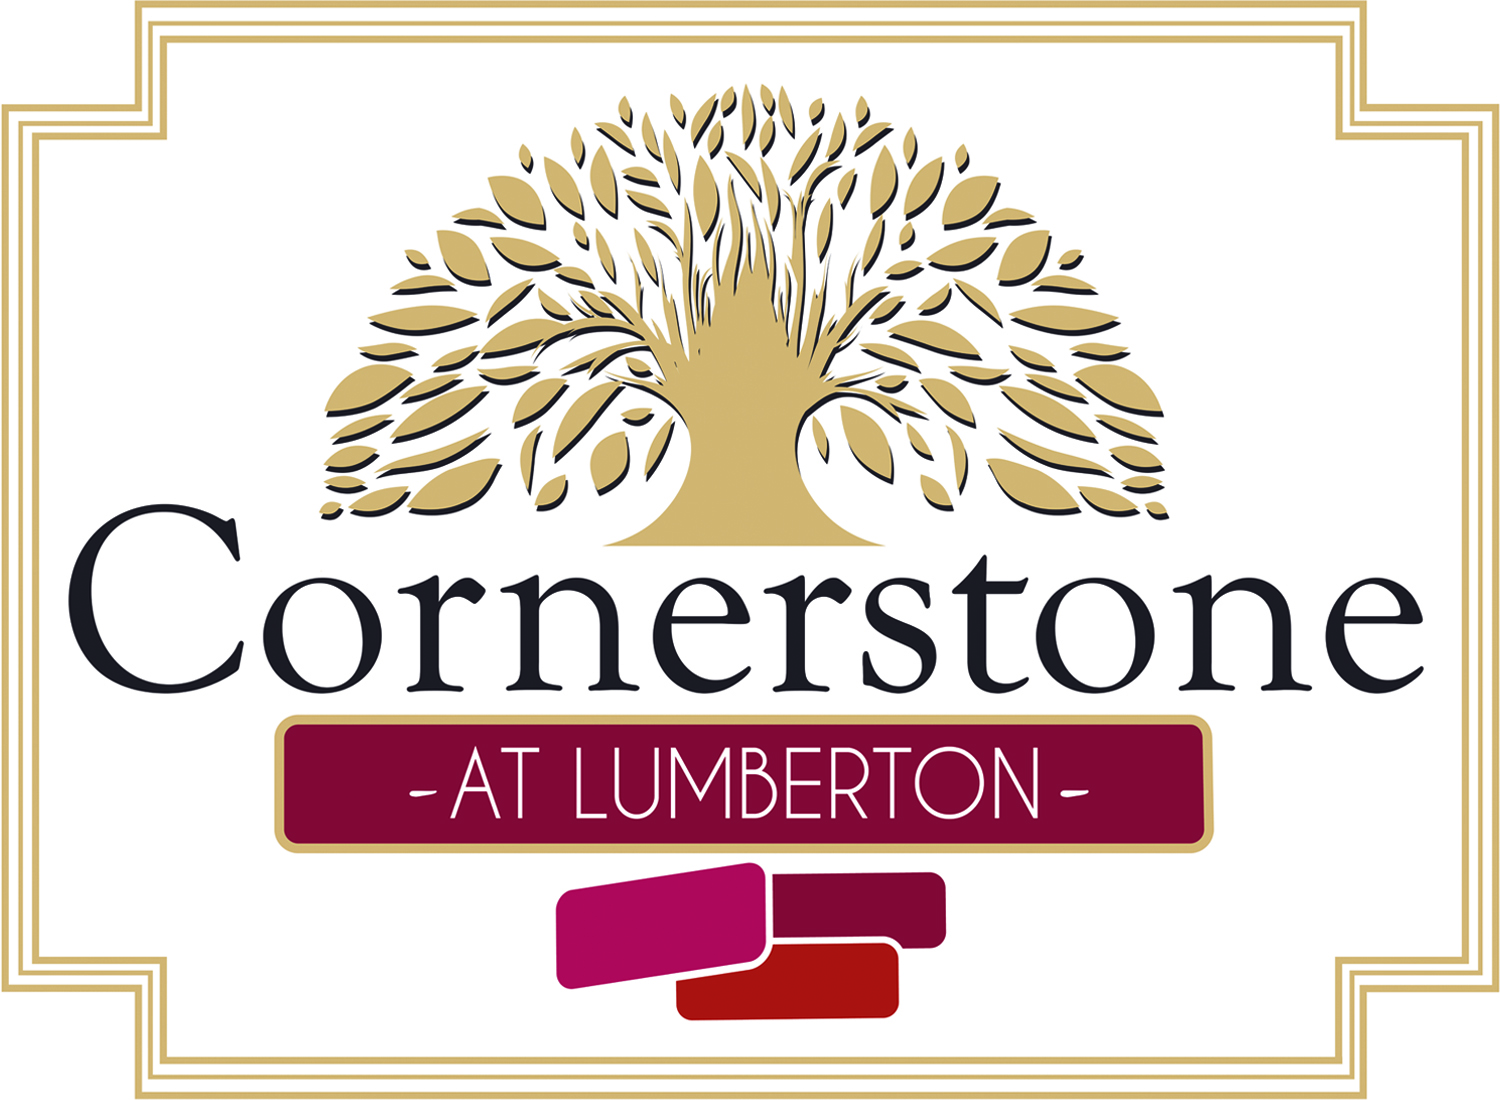 Cornerstone at Lumberton